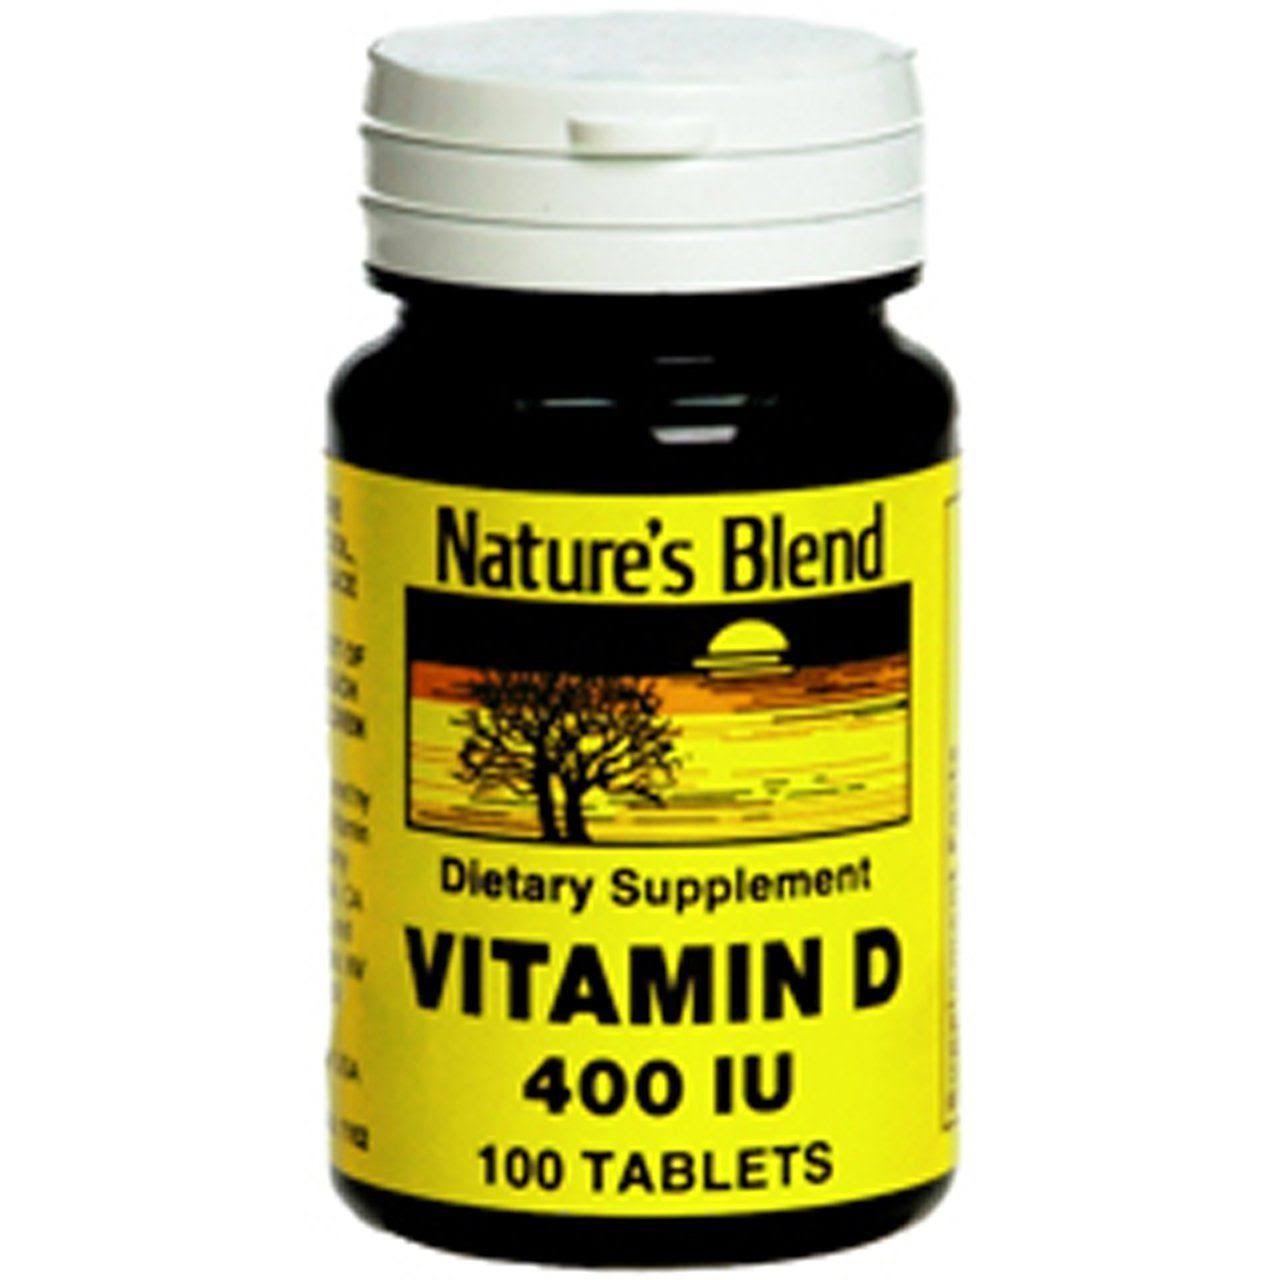 Nature's Blend D3 Vitamin D Dietary Supplement - 400 IU, 100 Tablets